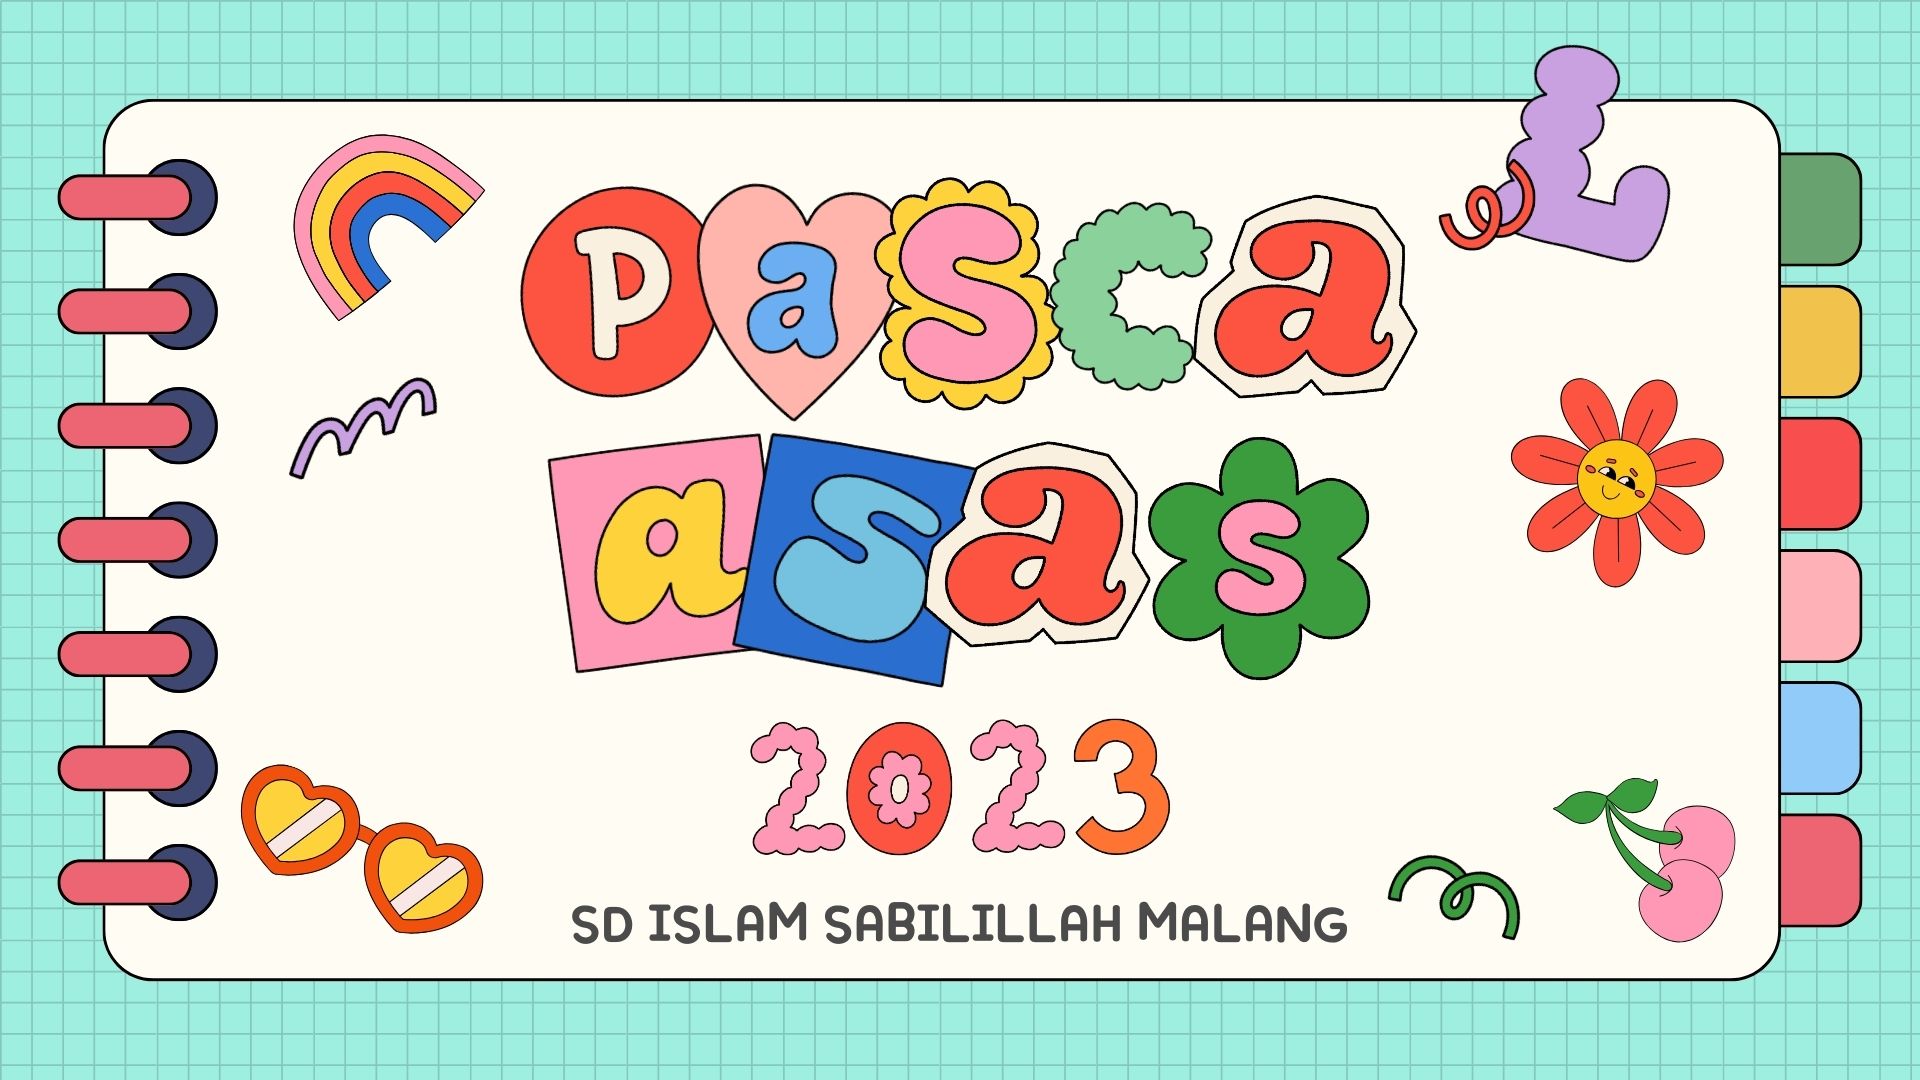 7. PASCA ASAS III 2023